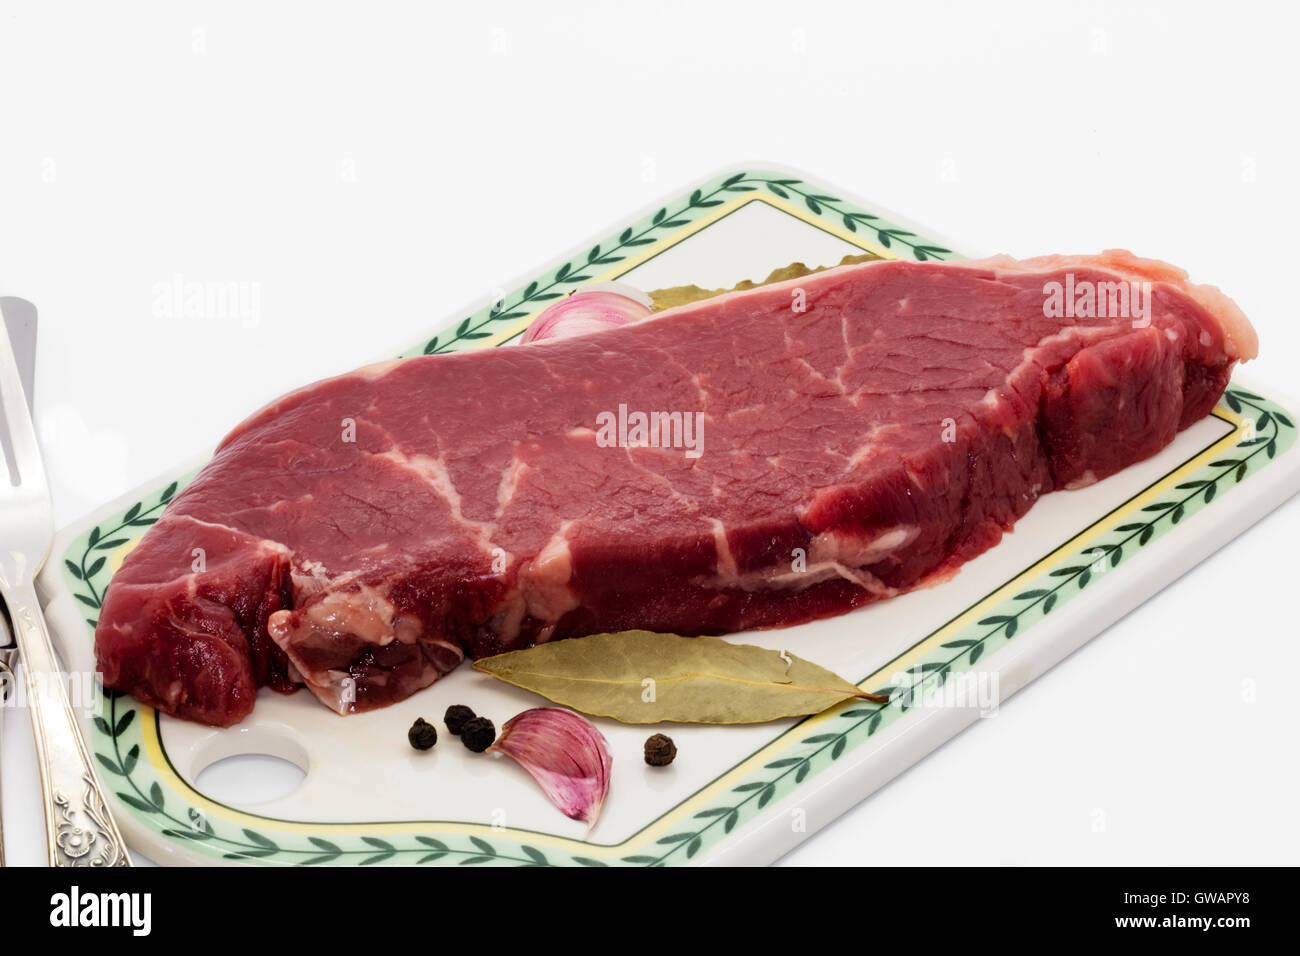 Sirloin steak on a ceramic board. Stock Photo